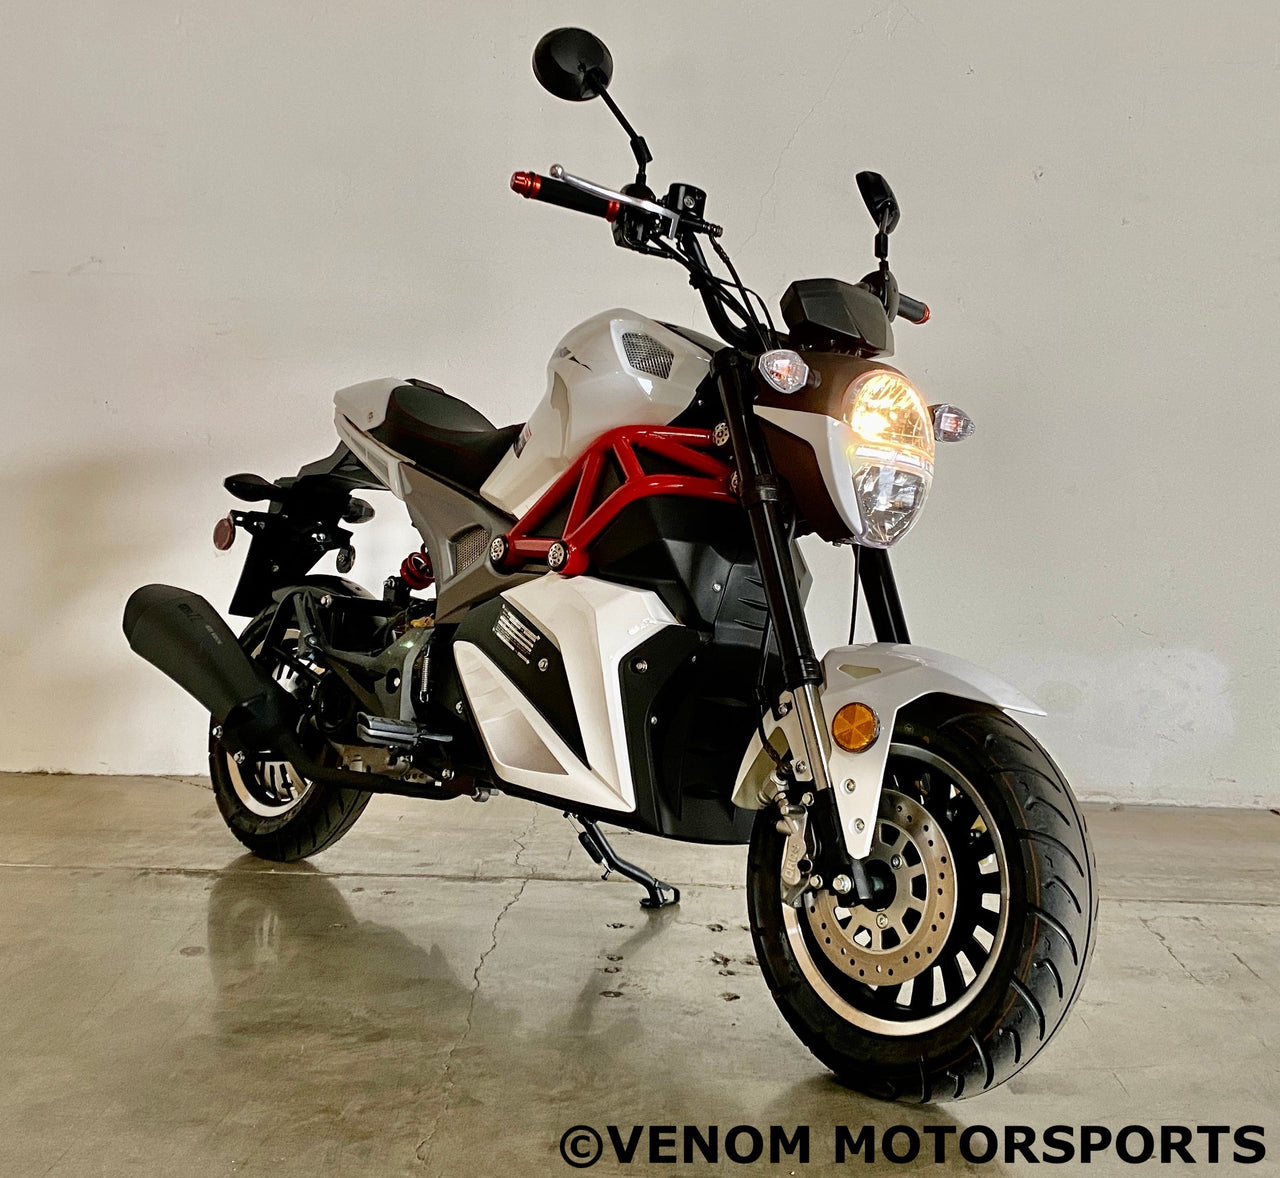 Venom x21 | 150cc Motorcycle | Automatic Transmission | Street Legal